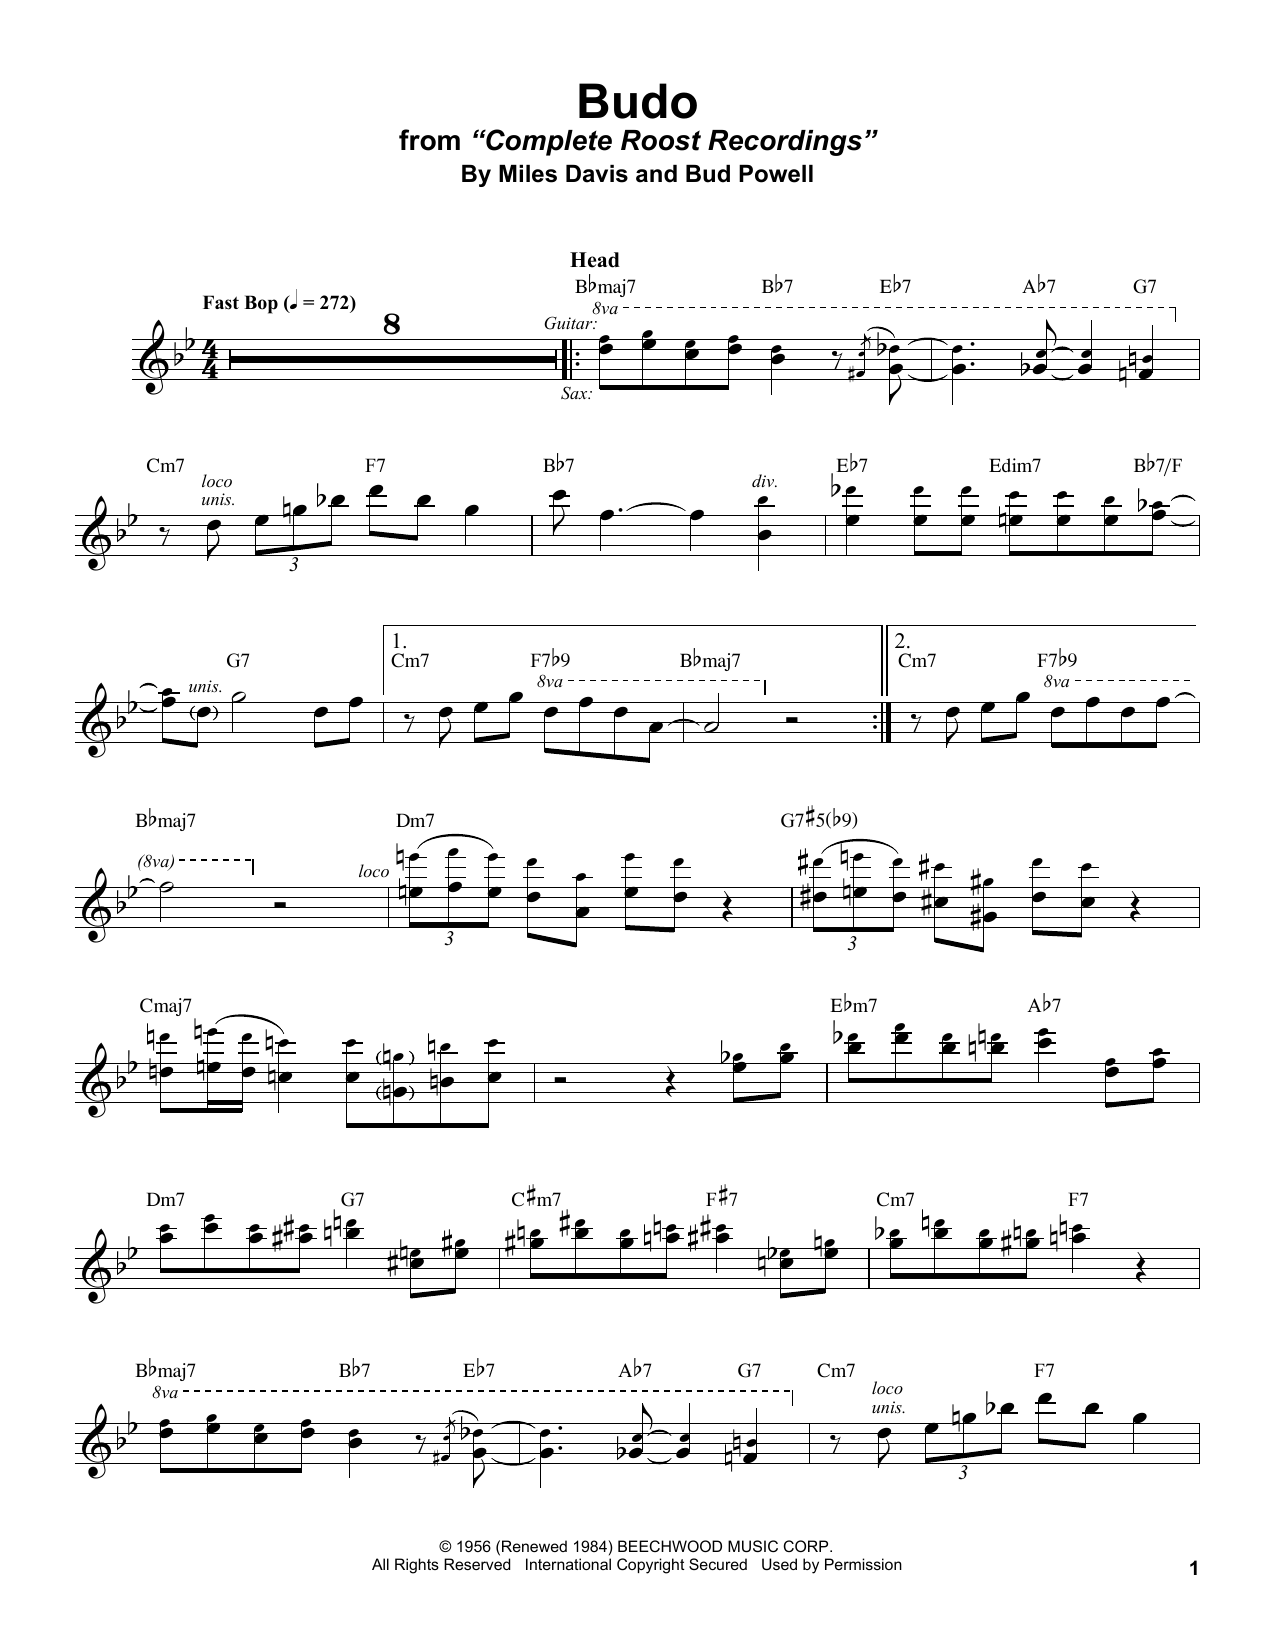 Stan Getz Budo Sheet Music Notes & Chords for Tenor Sax Transcription - Download or Print PDF